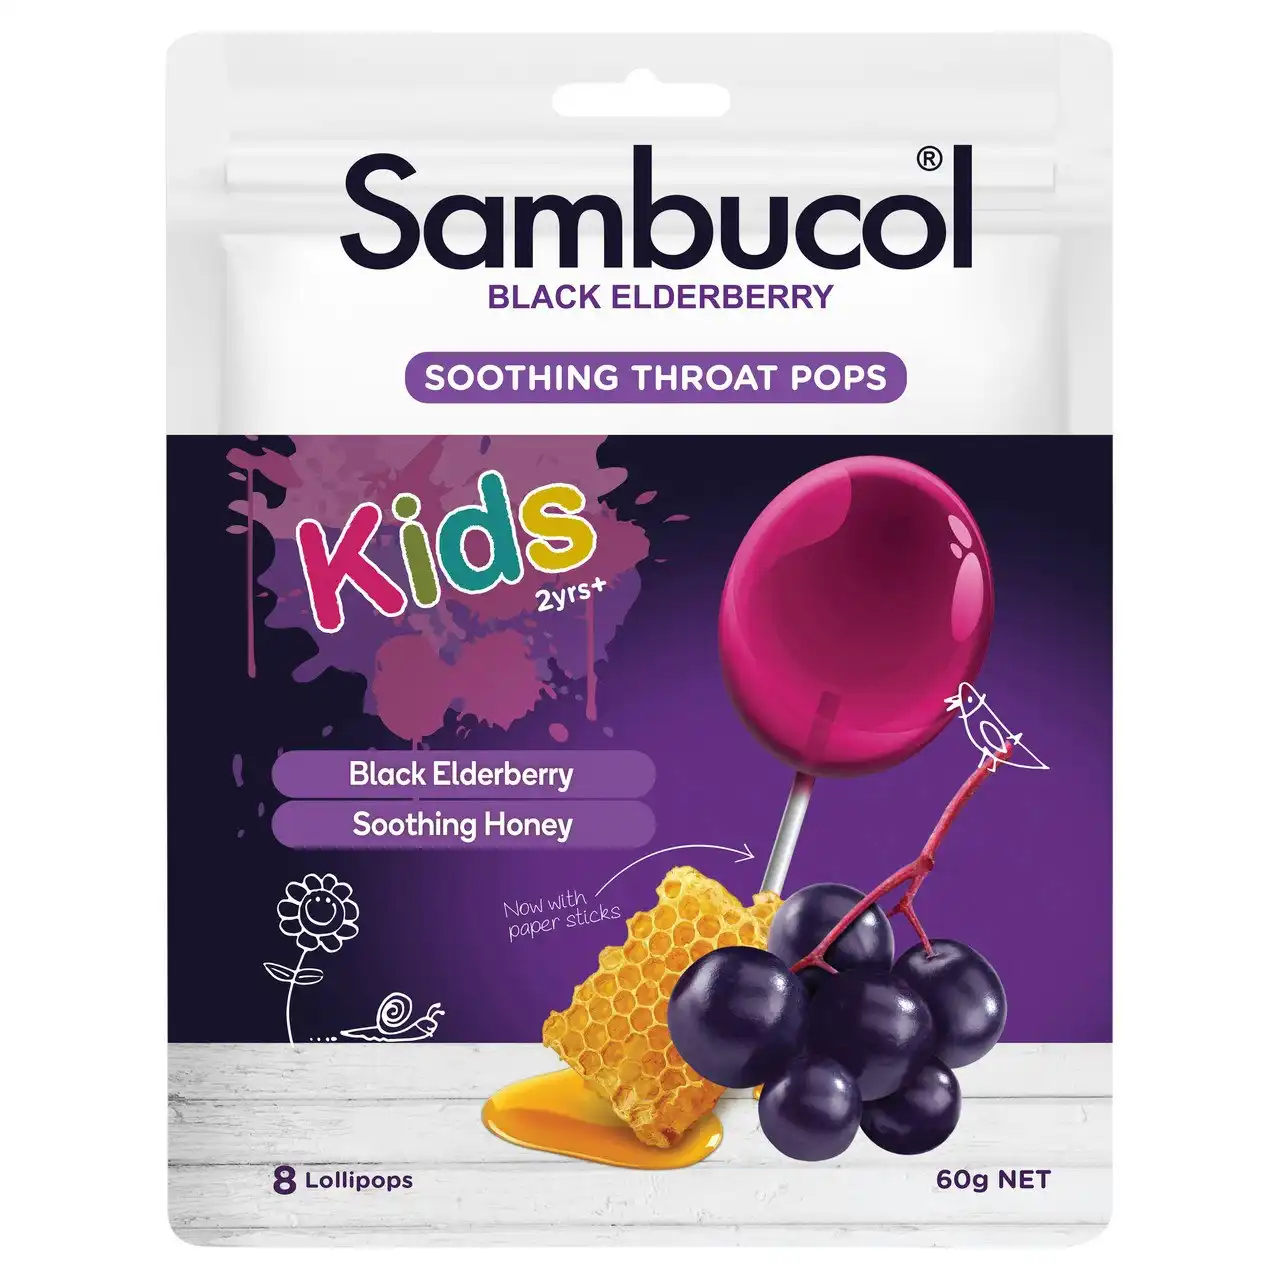 Sambucol Black Elderberry Soothing Throat Pops 60g